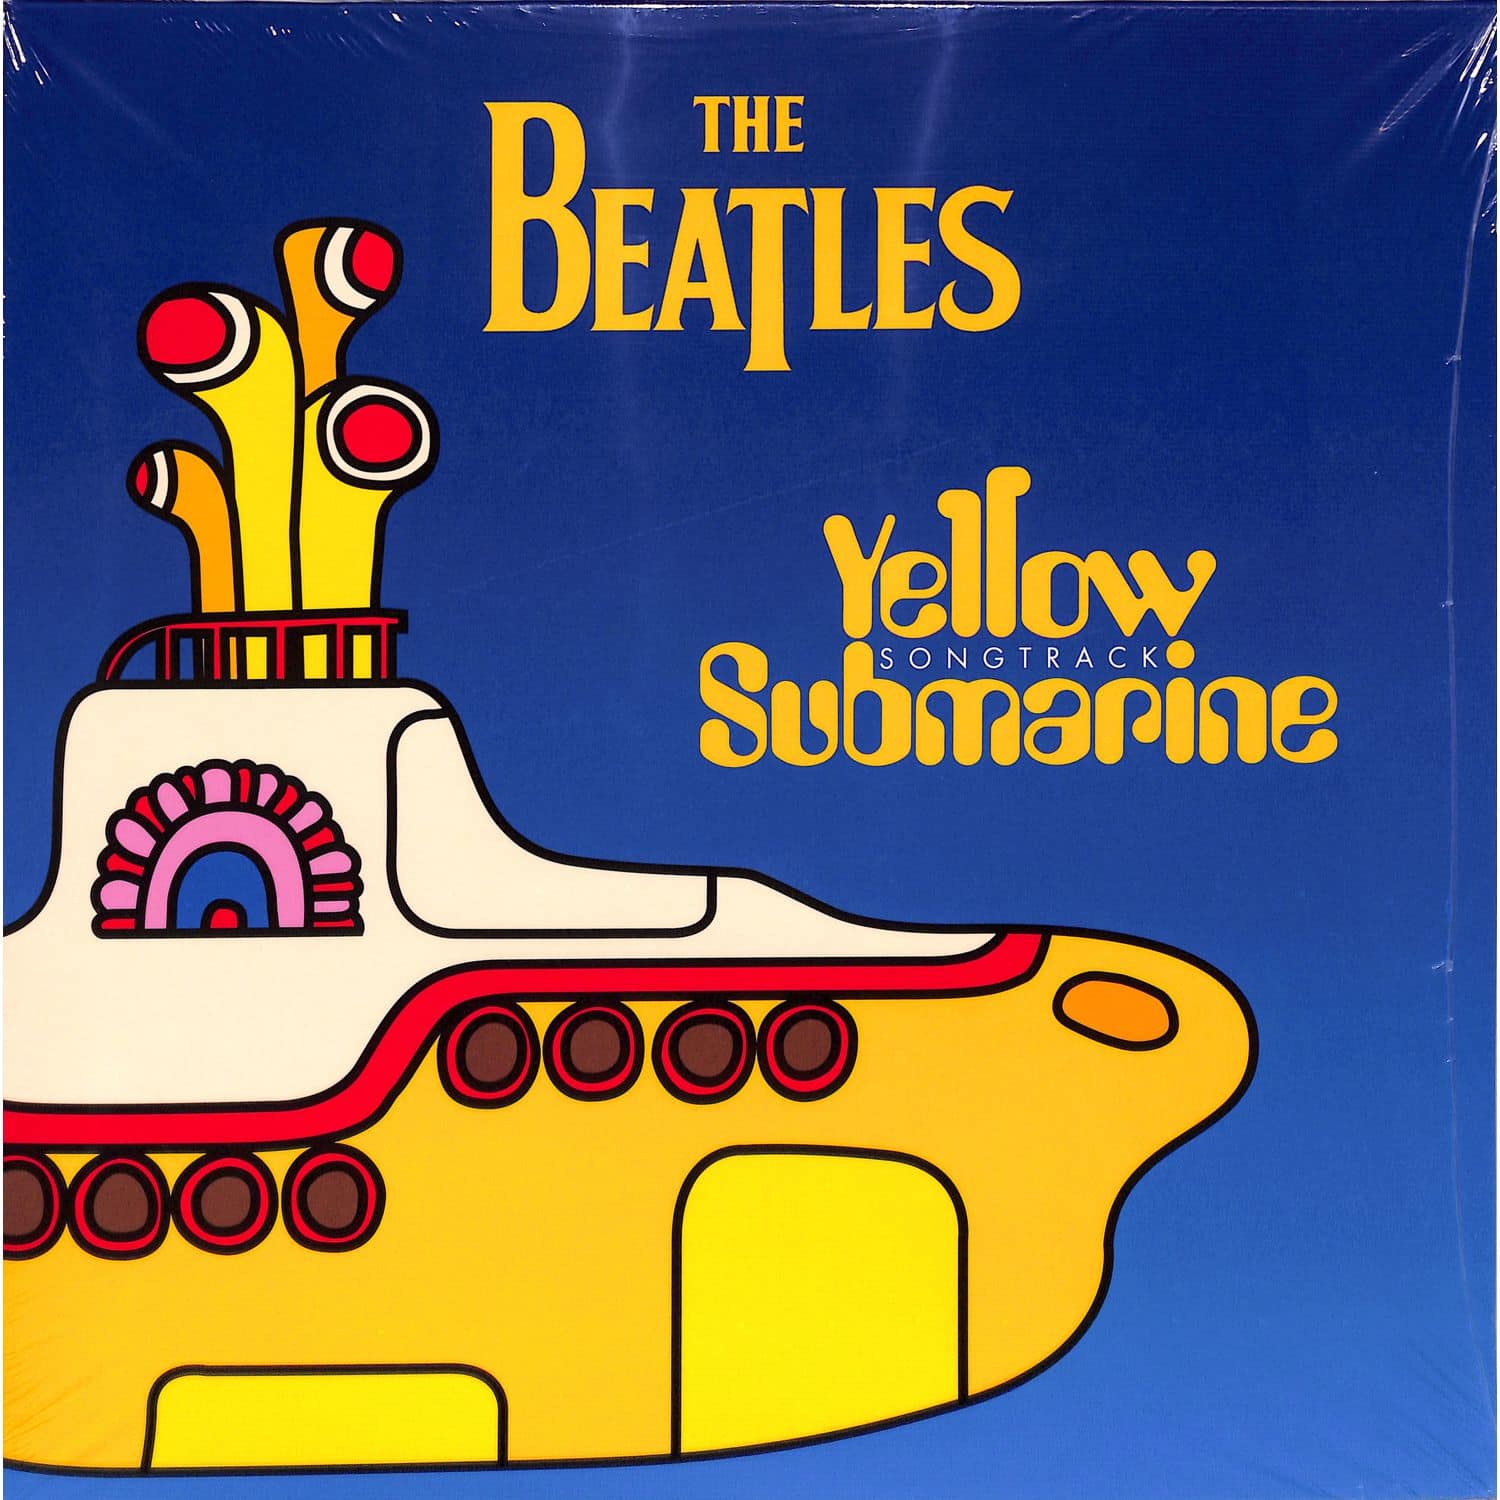 The Beatles - YELLOW SUBMARINE Songtrack 